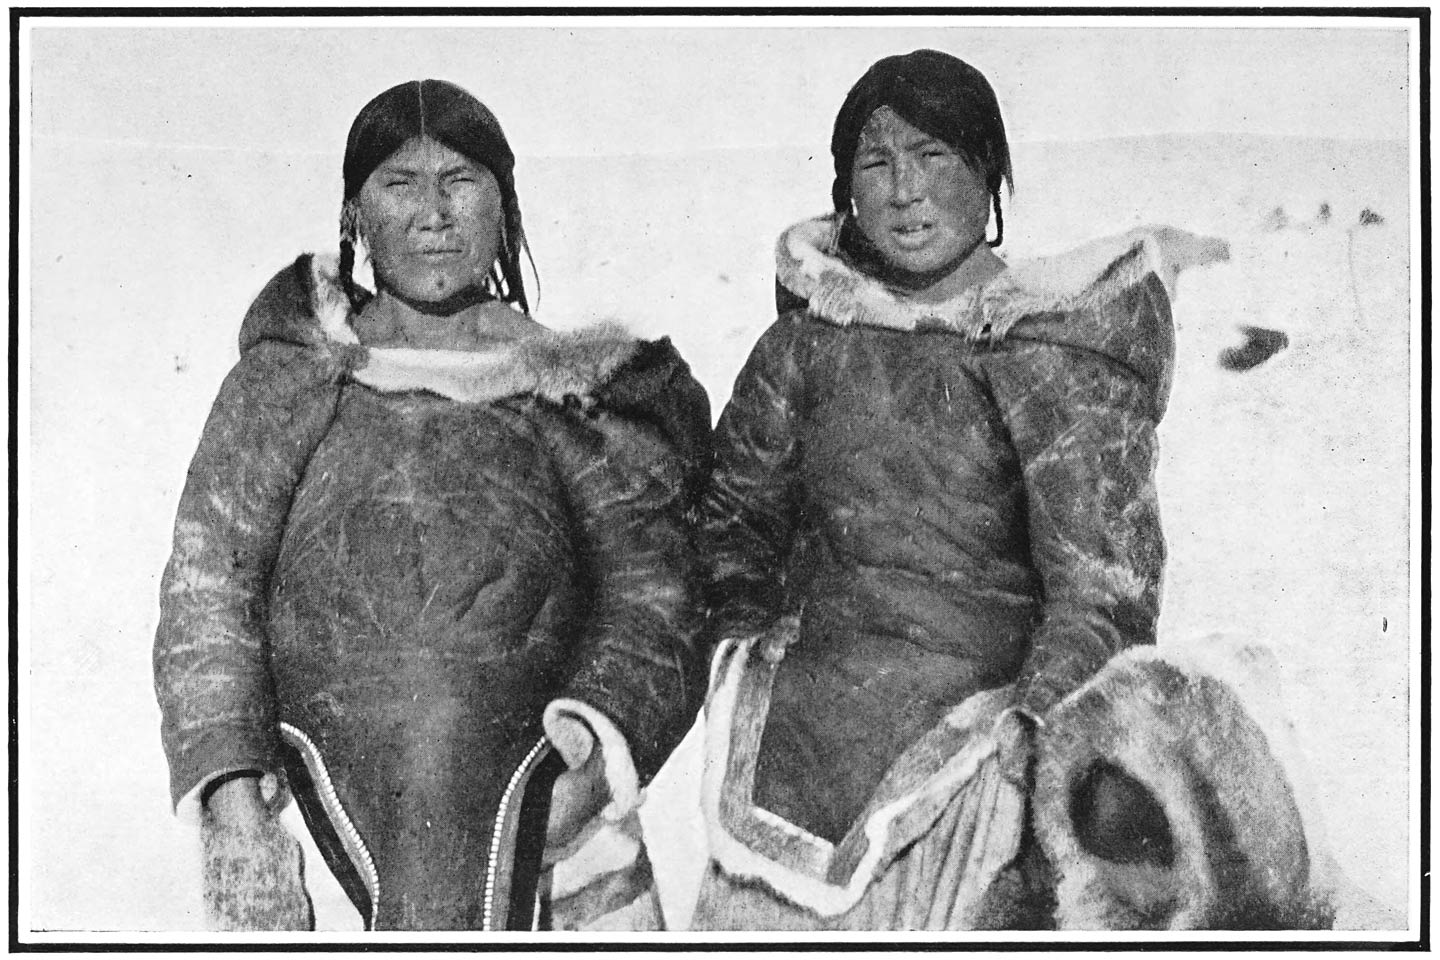 Among unknown Eskimo photo